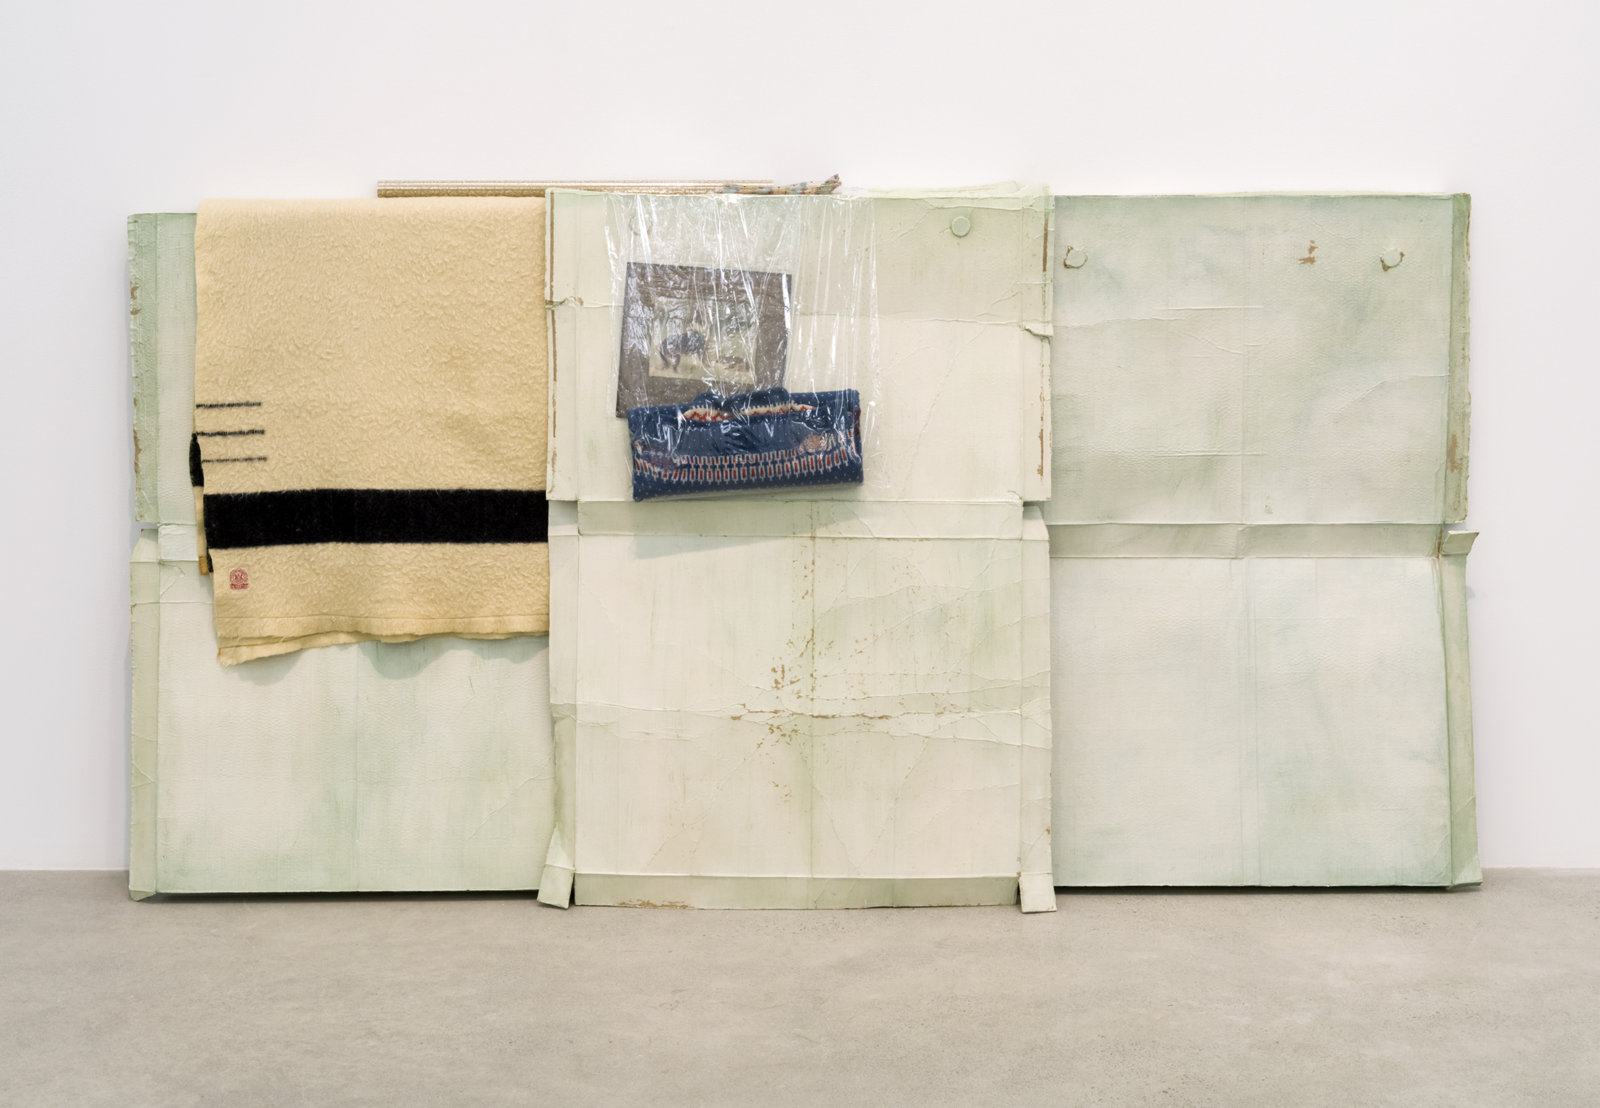 Liz Magor, Good Shepherd, 2016, polymerized gypsum, wool, plastic bags, plastic sheet, cardboard, 53 x 103 x 12 in. (133 x 262 x 31 cm)